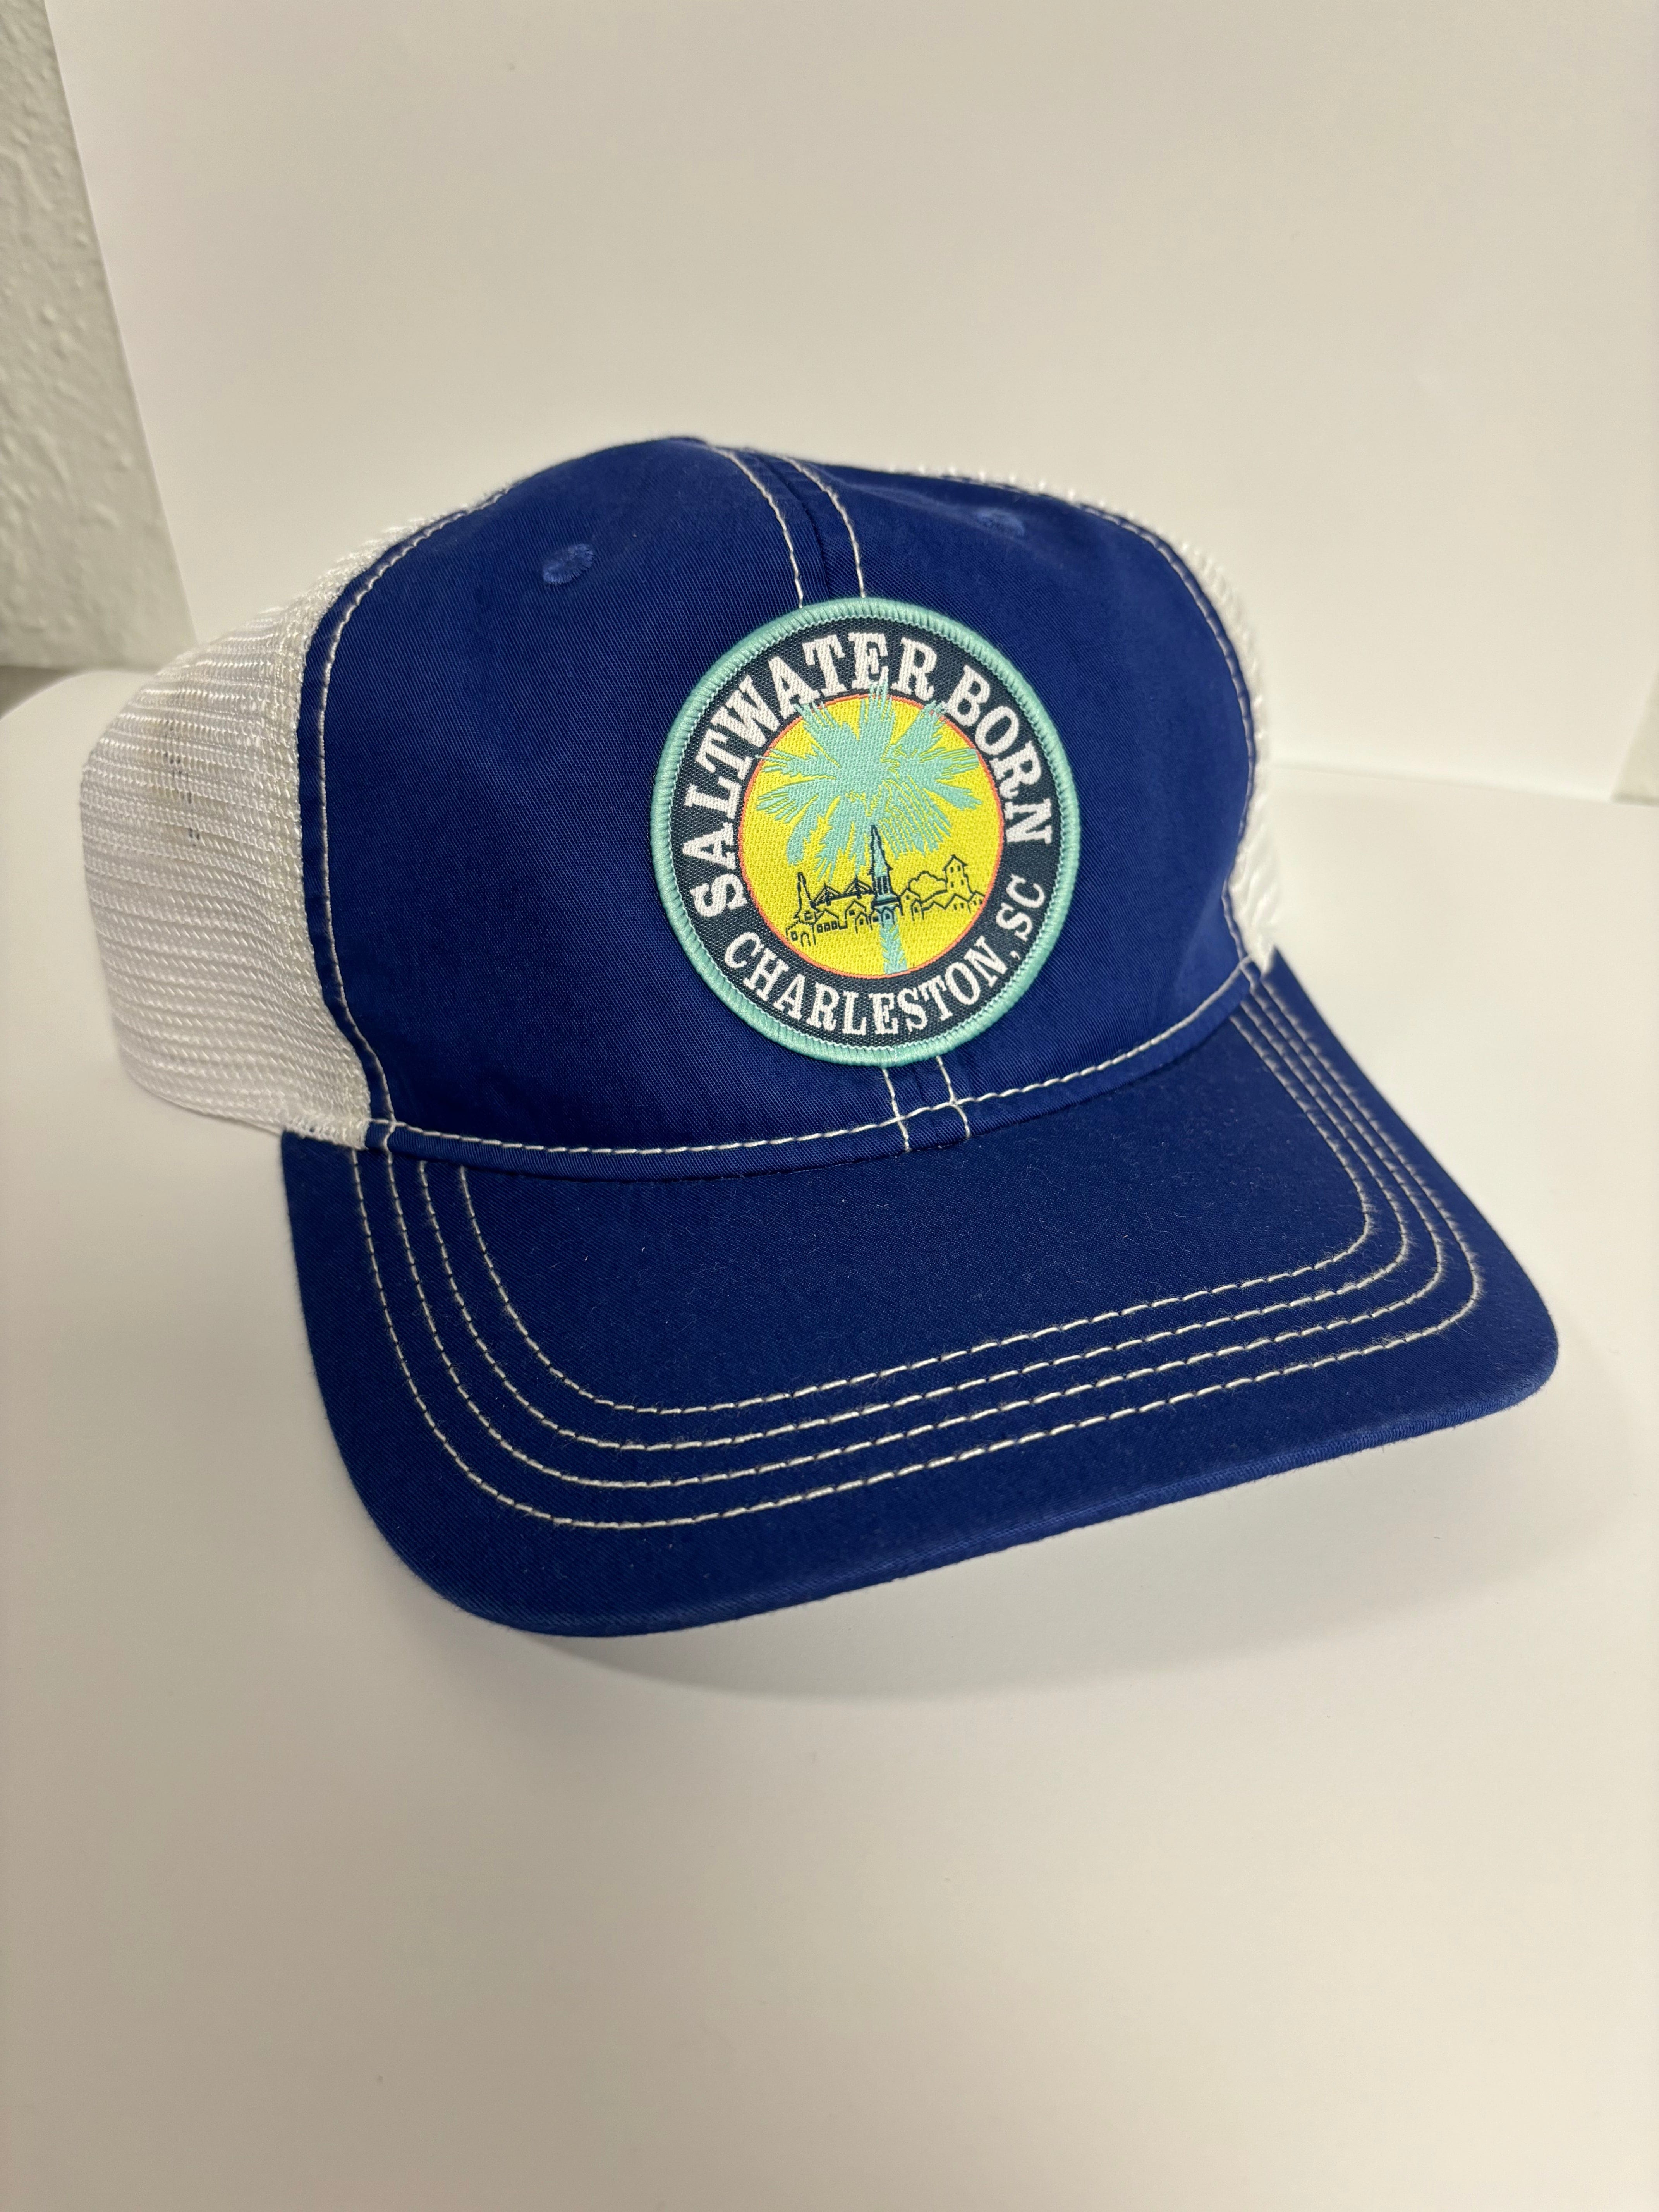 Charleston, SC Vintage Trucker Mesh Hat - Russell's Western Wear, Inc.